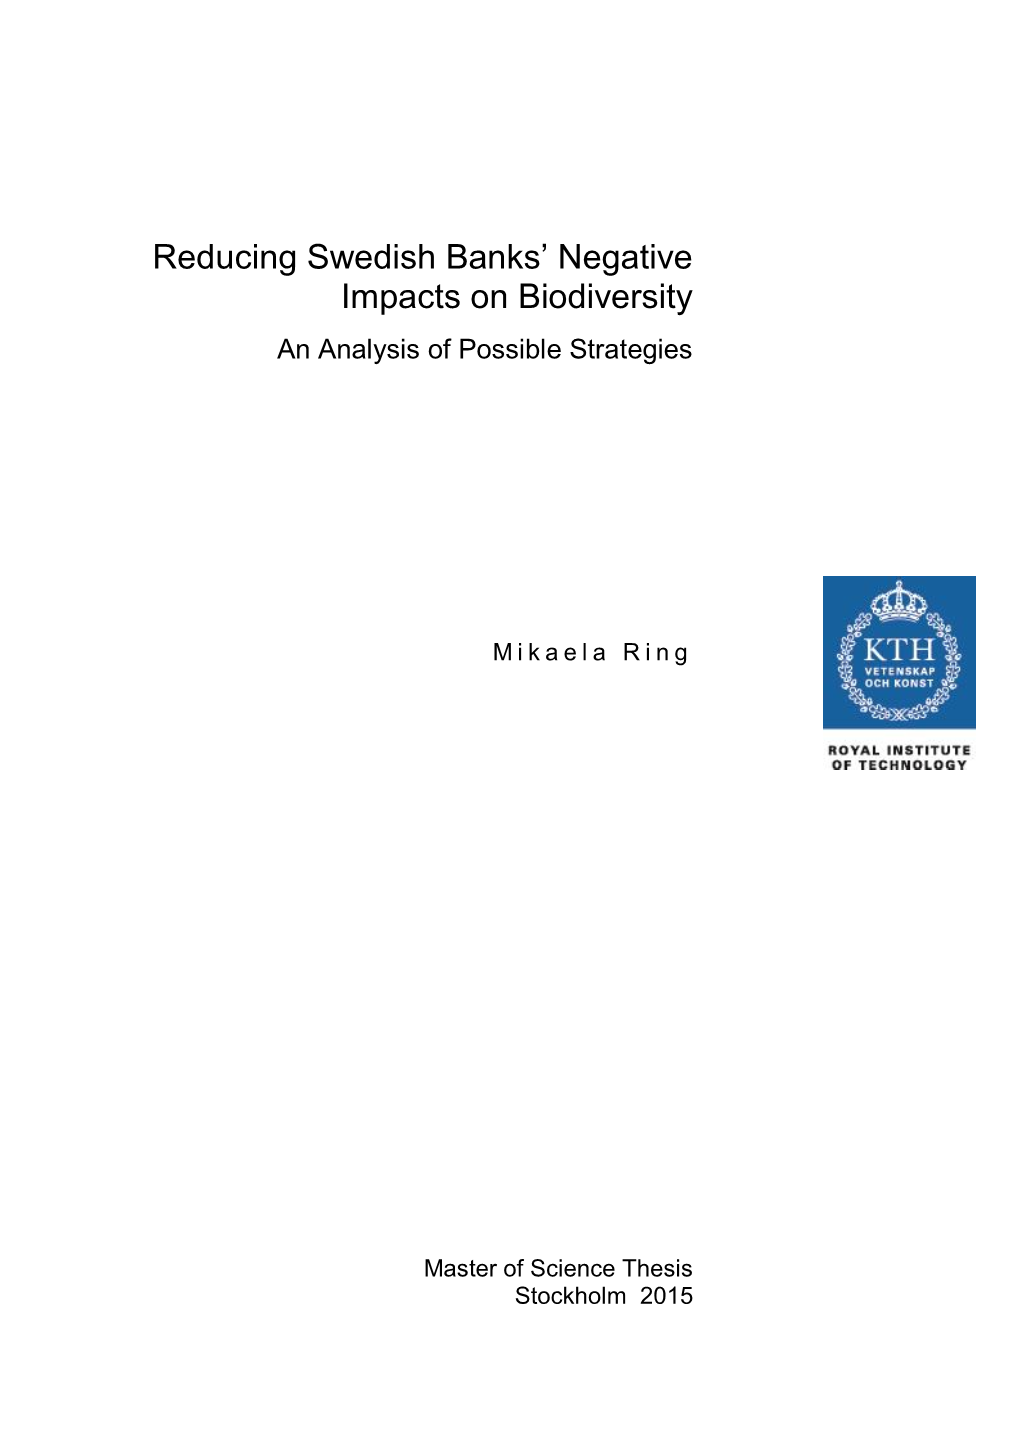 Reducing Swedish Banks' Negative Impacts on Biodiversity